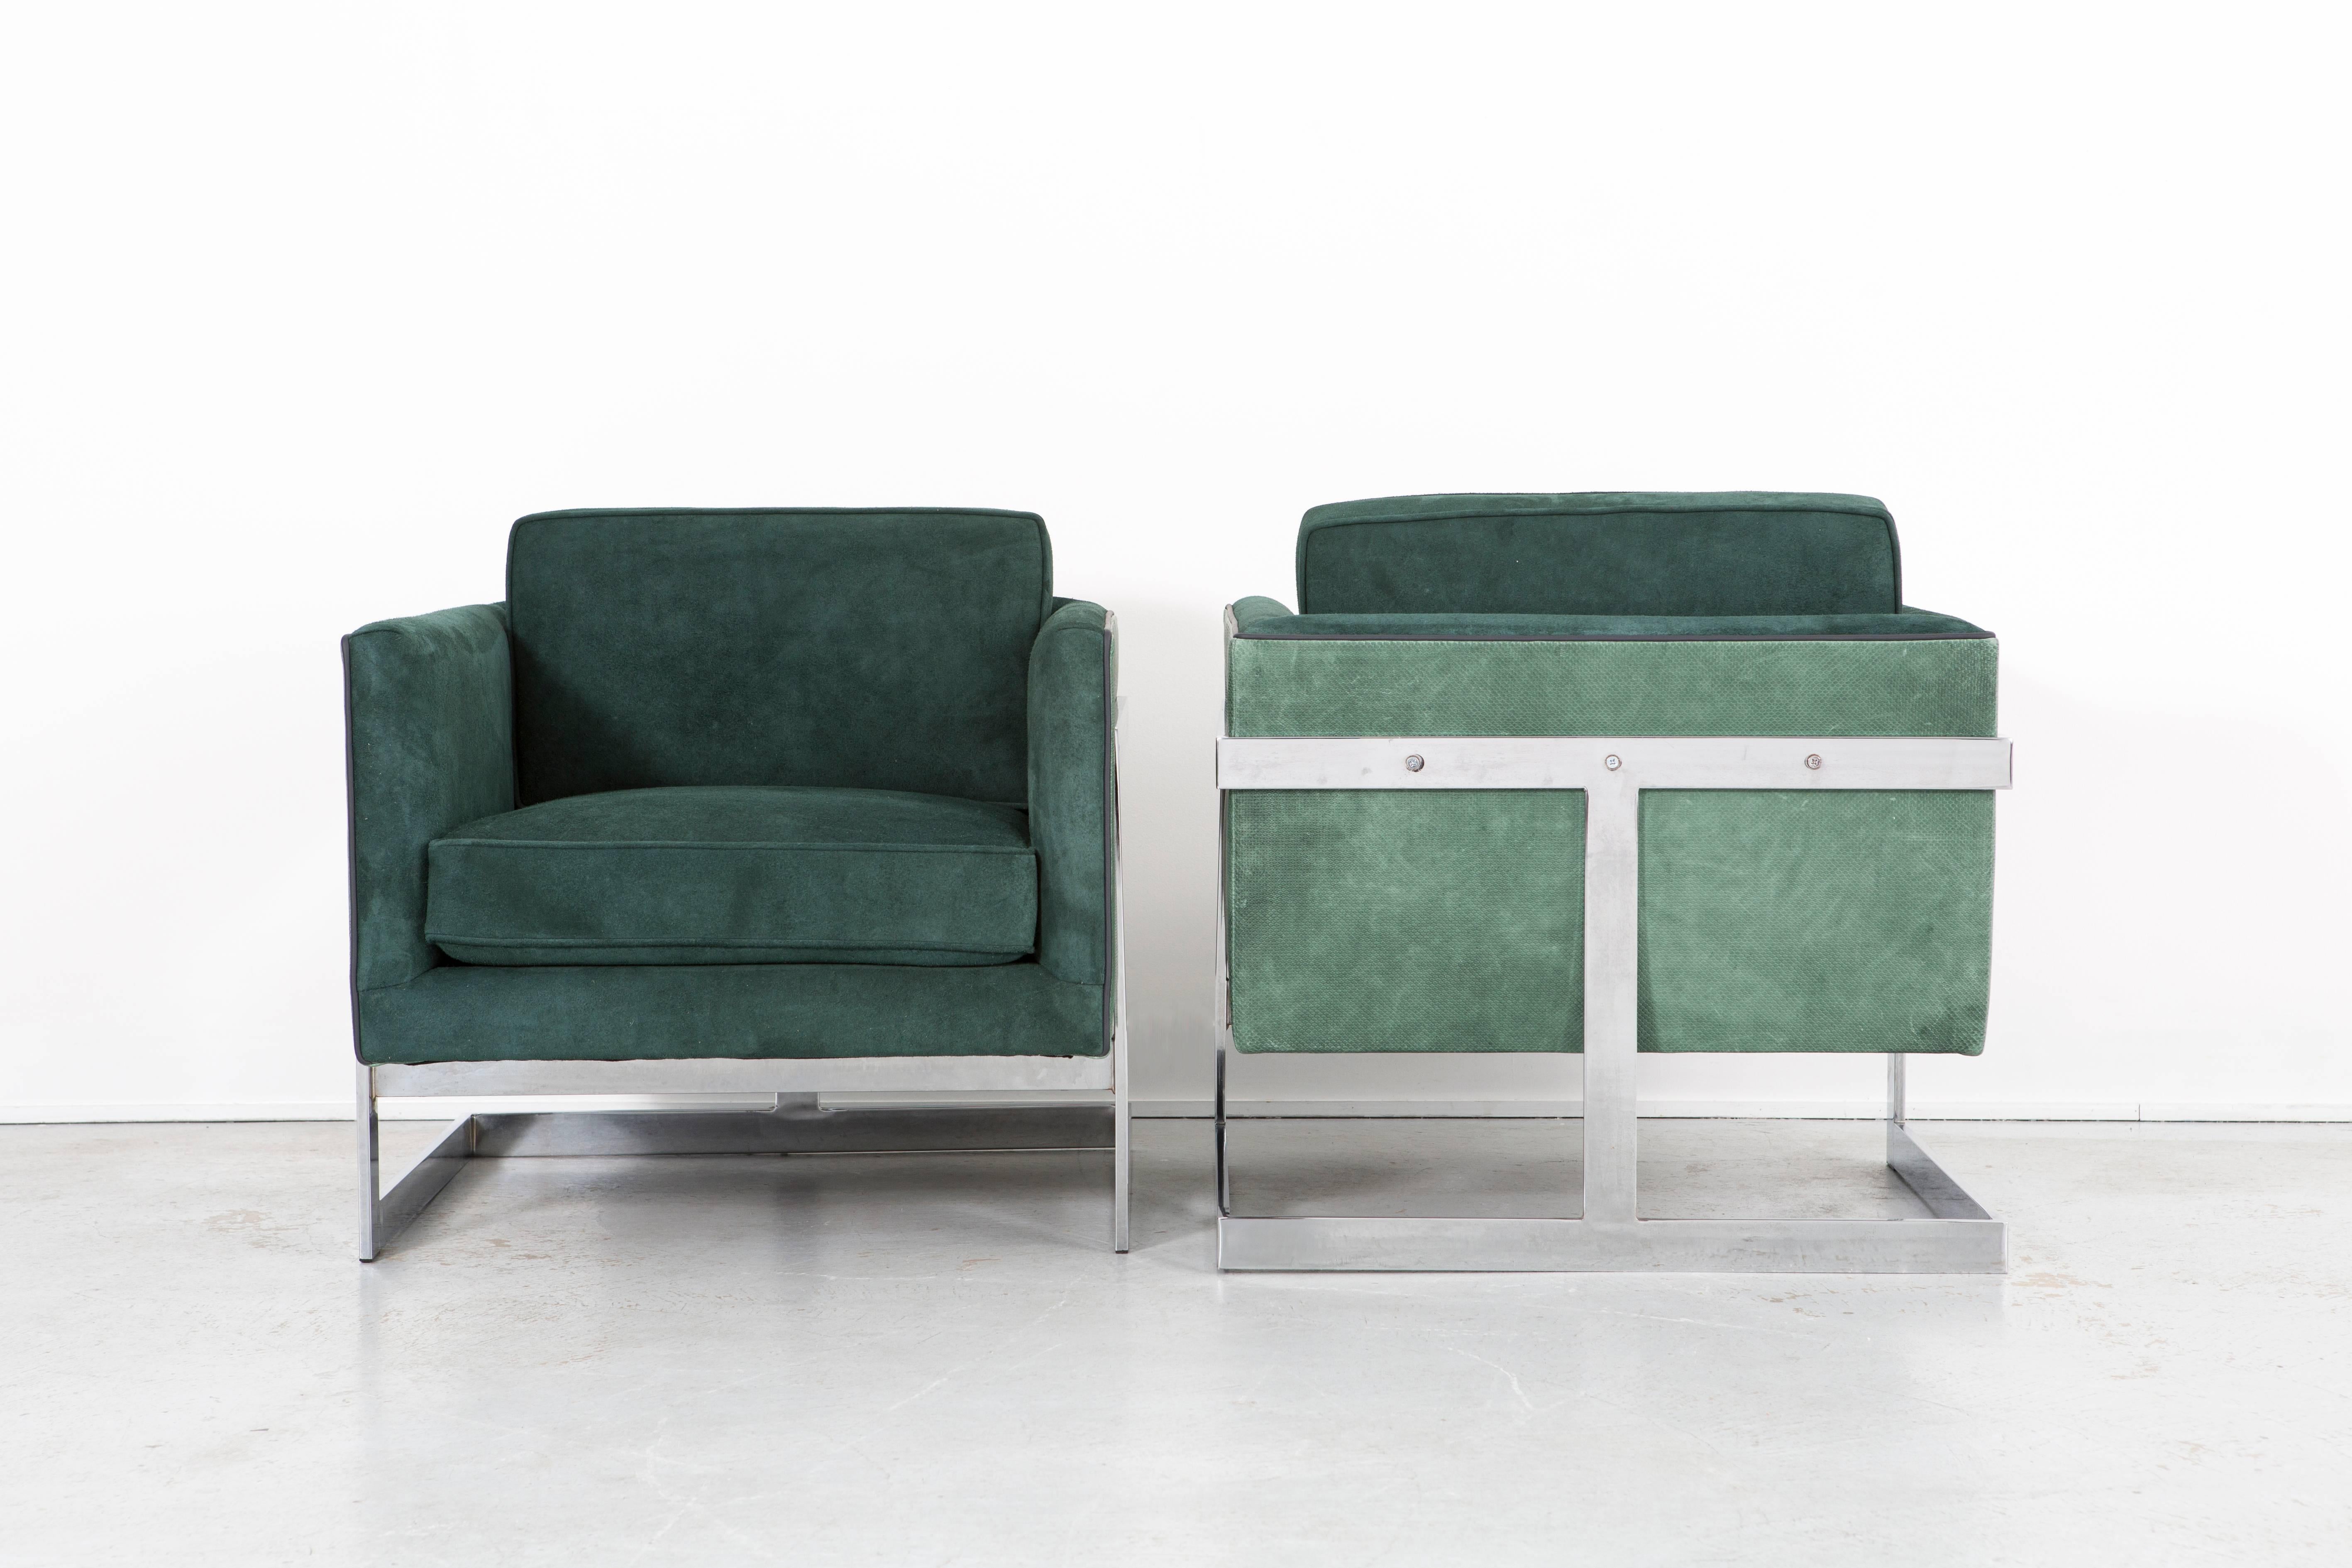 American Set of Mid-Century Modern Milo Baughman Chairs